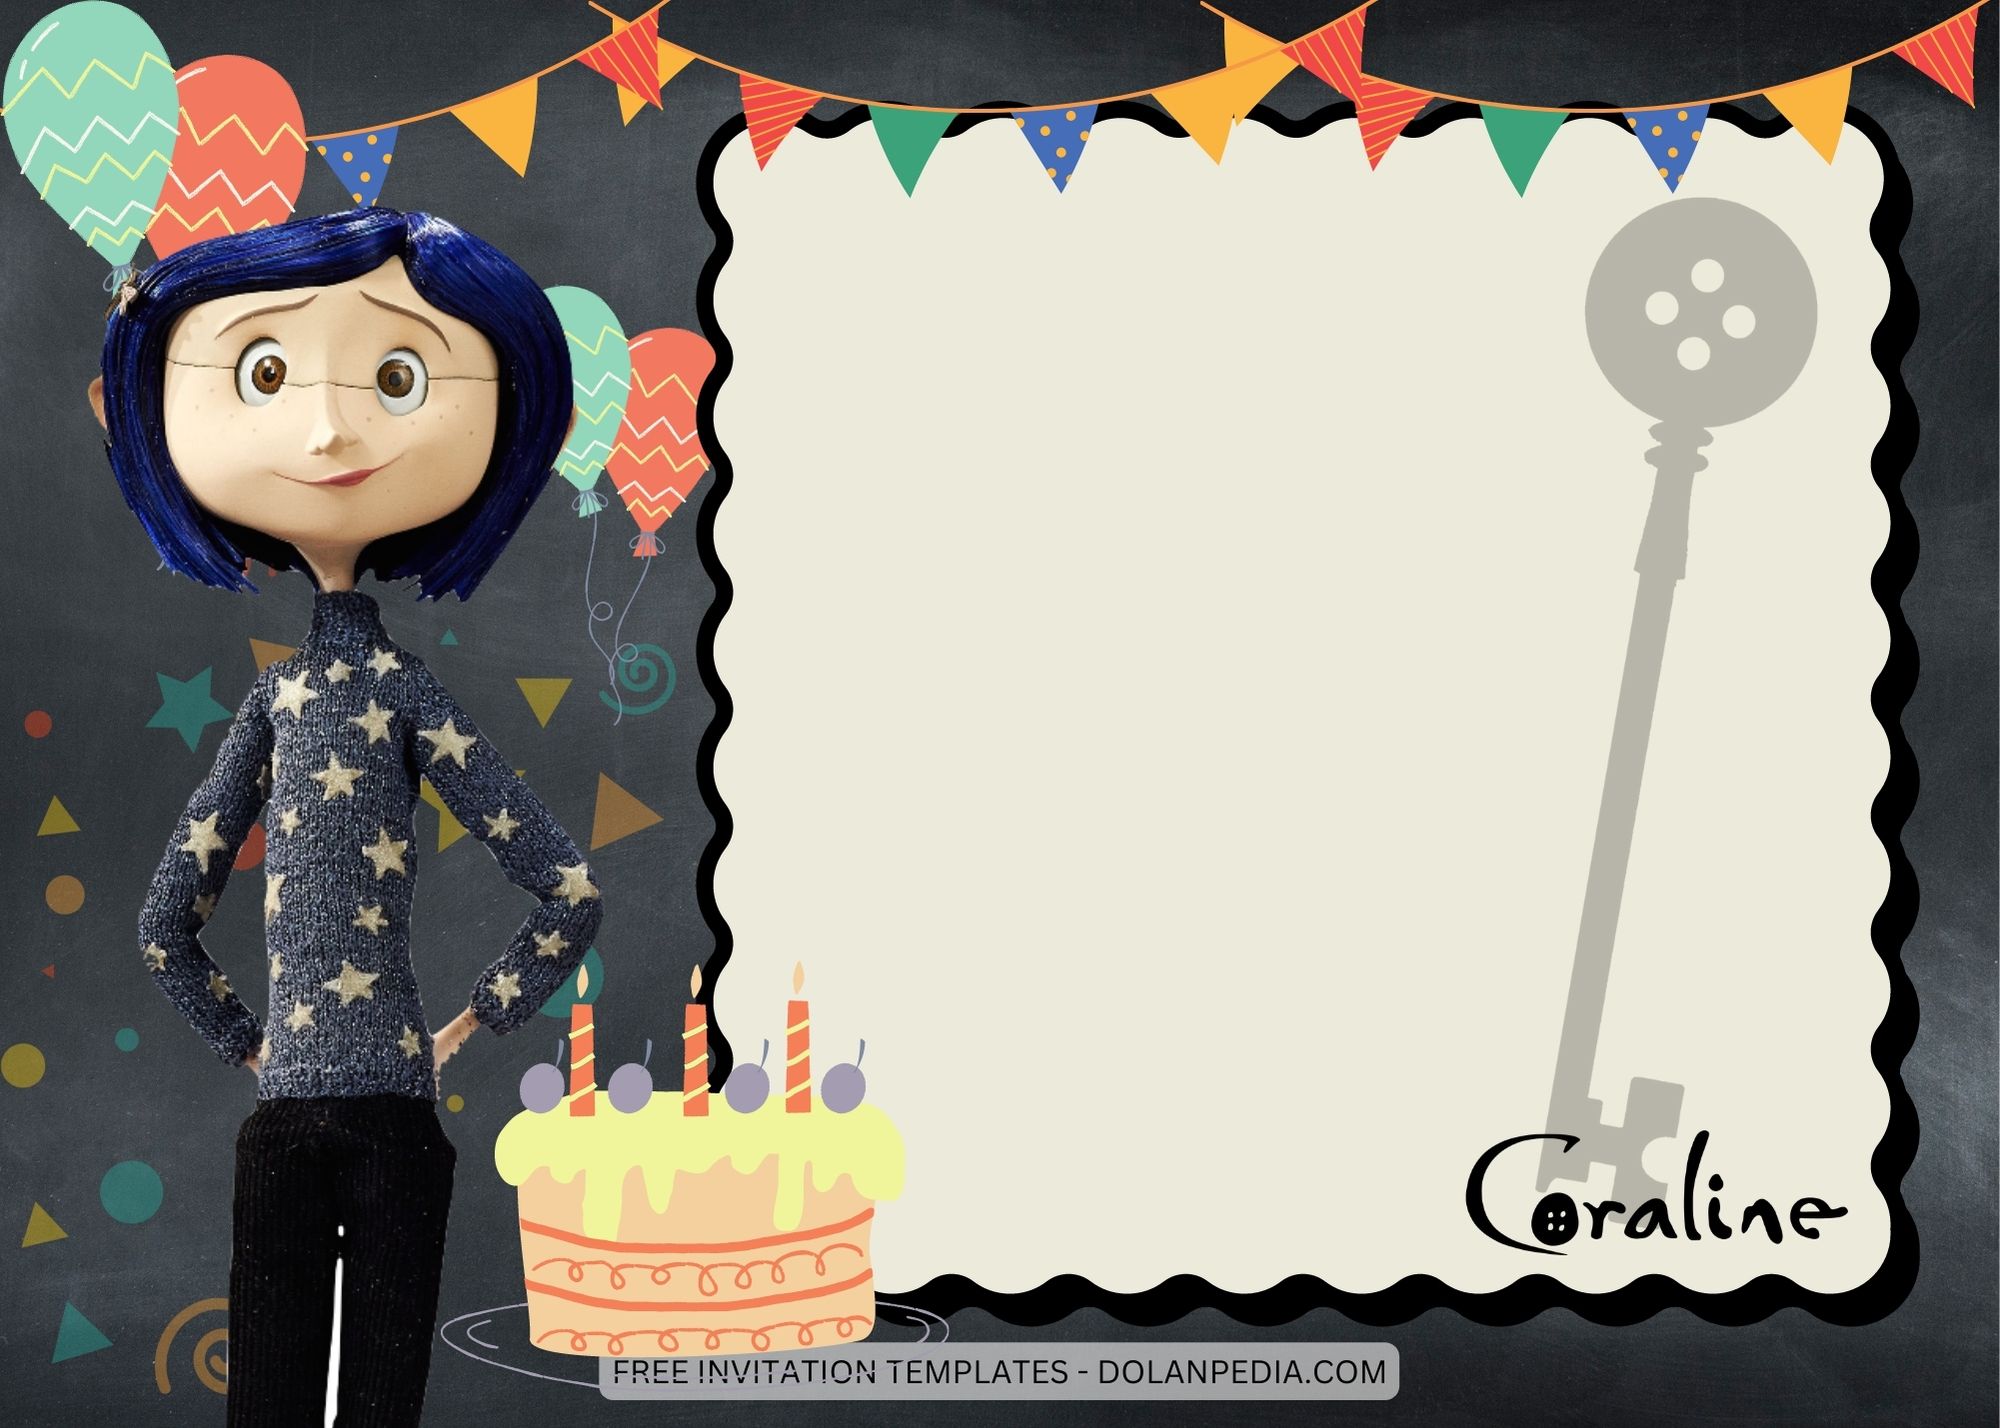 Blank Coraline Birthday Invitation Templates Four